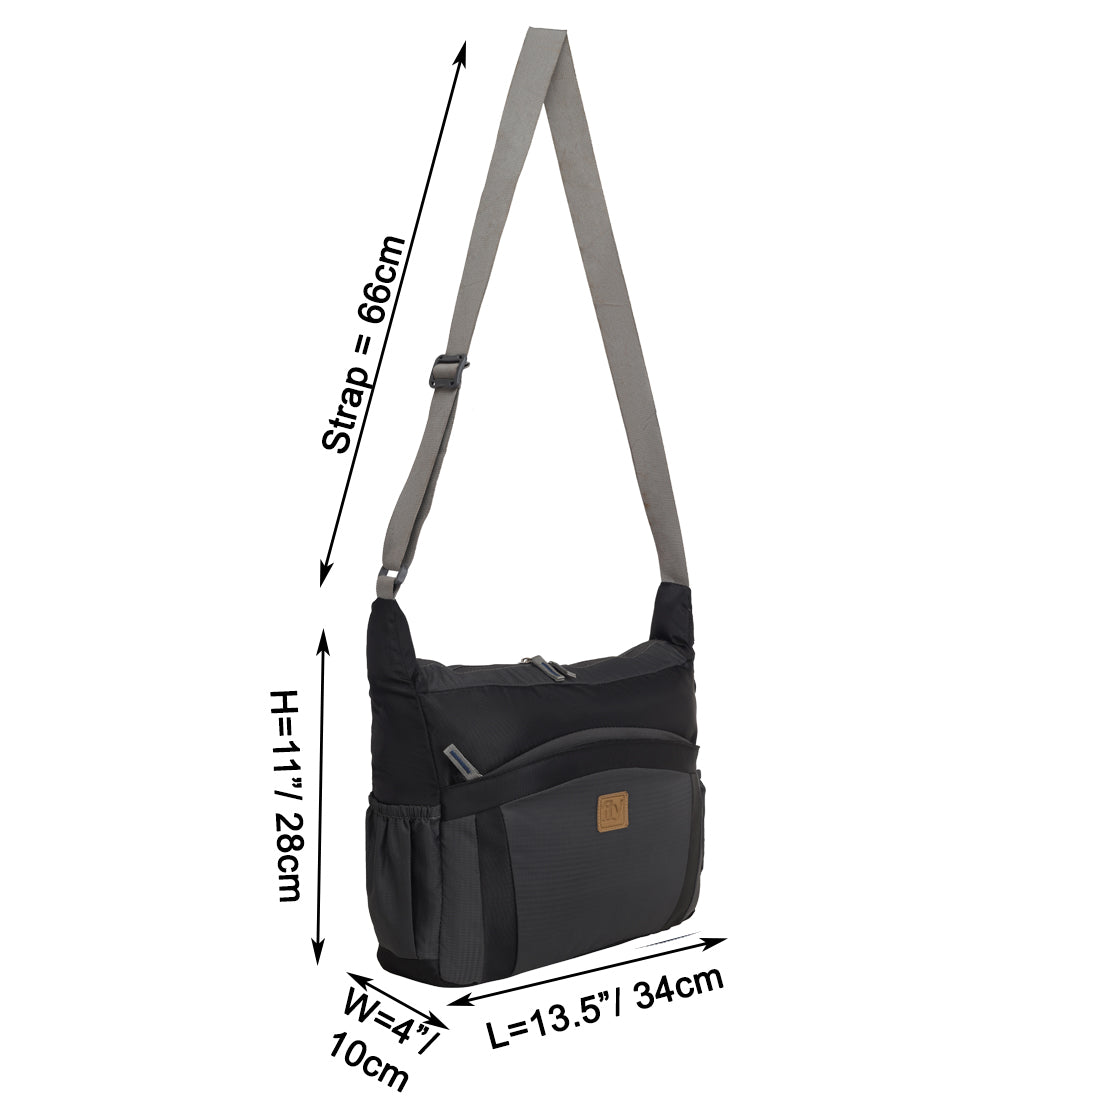 CLOUDS GEAR Nylon Cross Body Messenger Sling Bag 12 L Travel Office  Business One Side Padded Shoulder Bag for Men Women (TOP10, Black) :  : Fashion